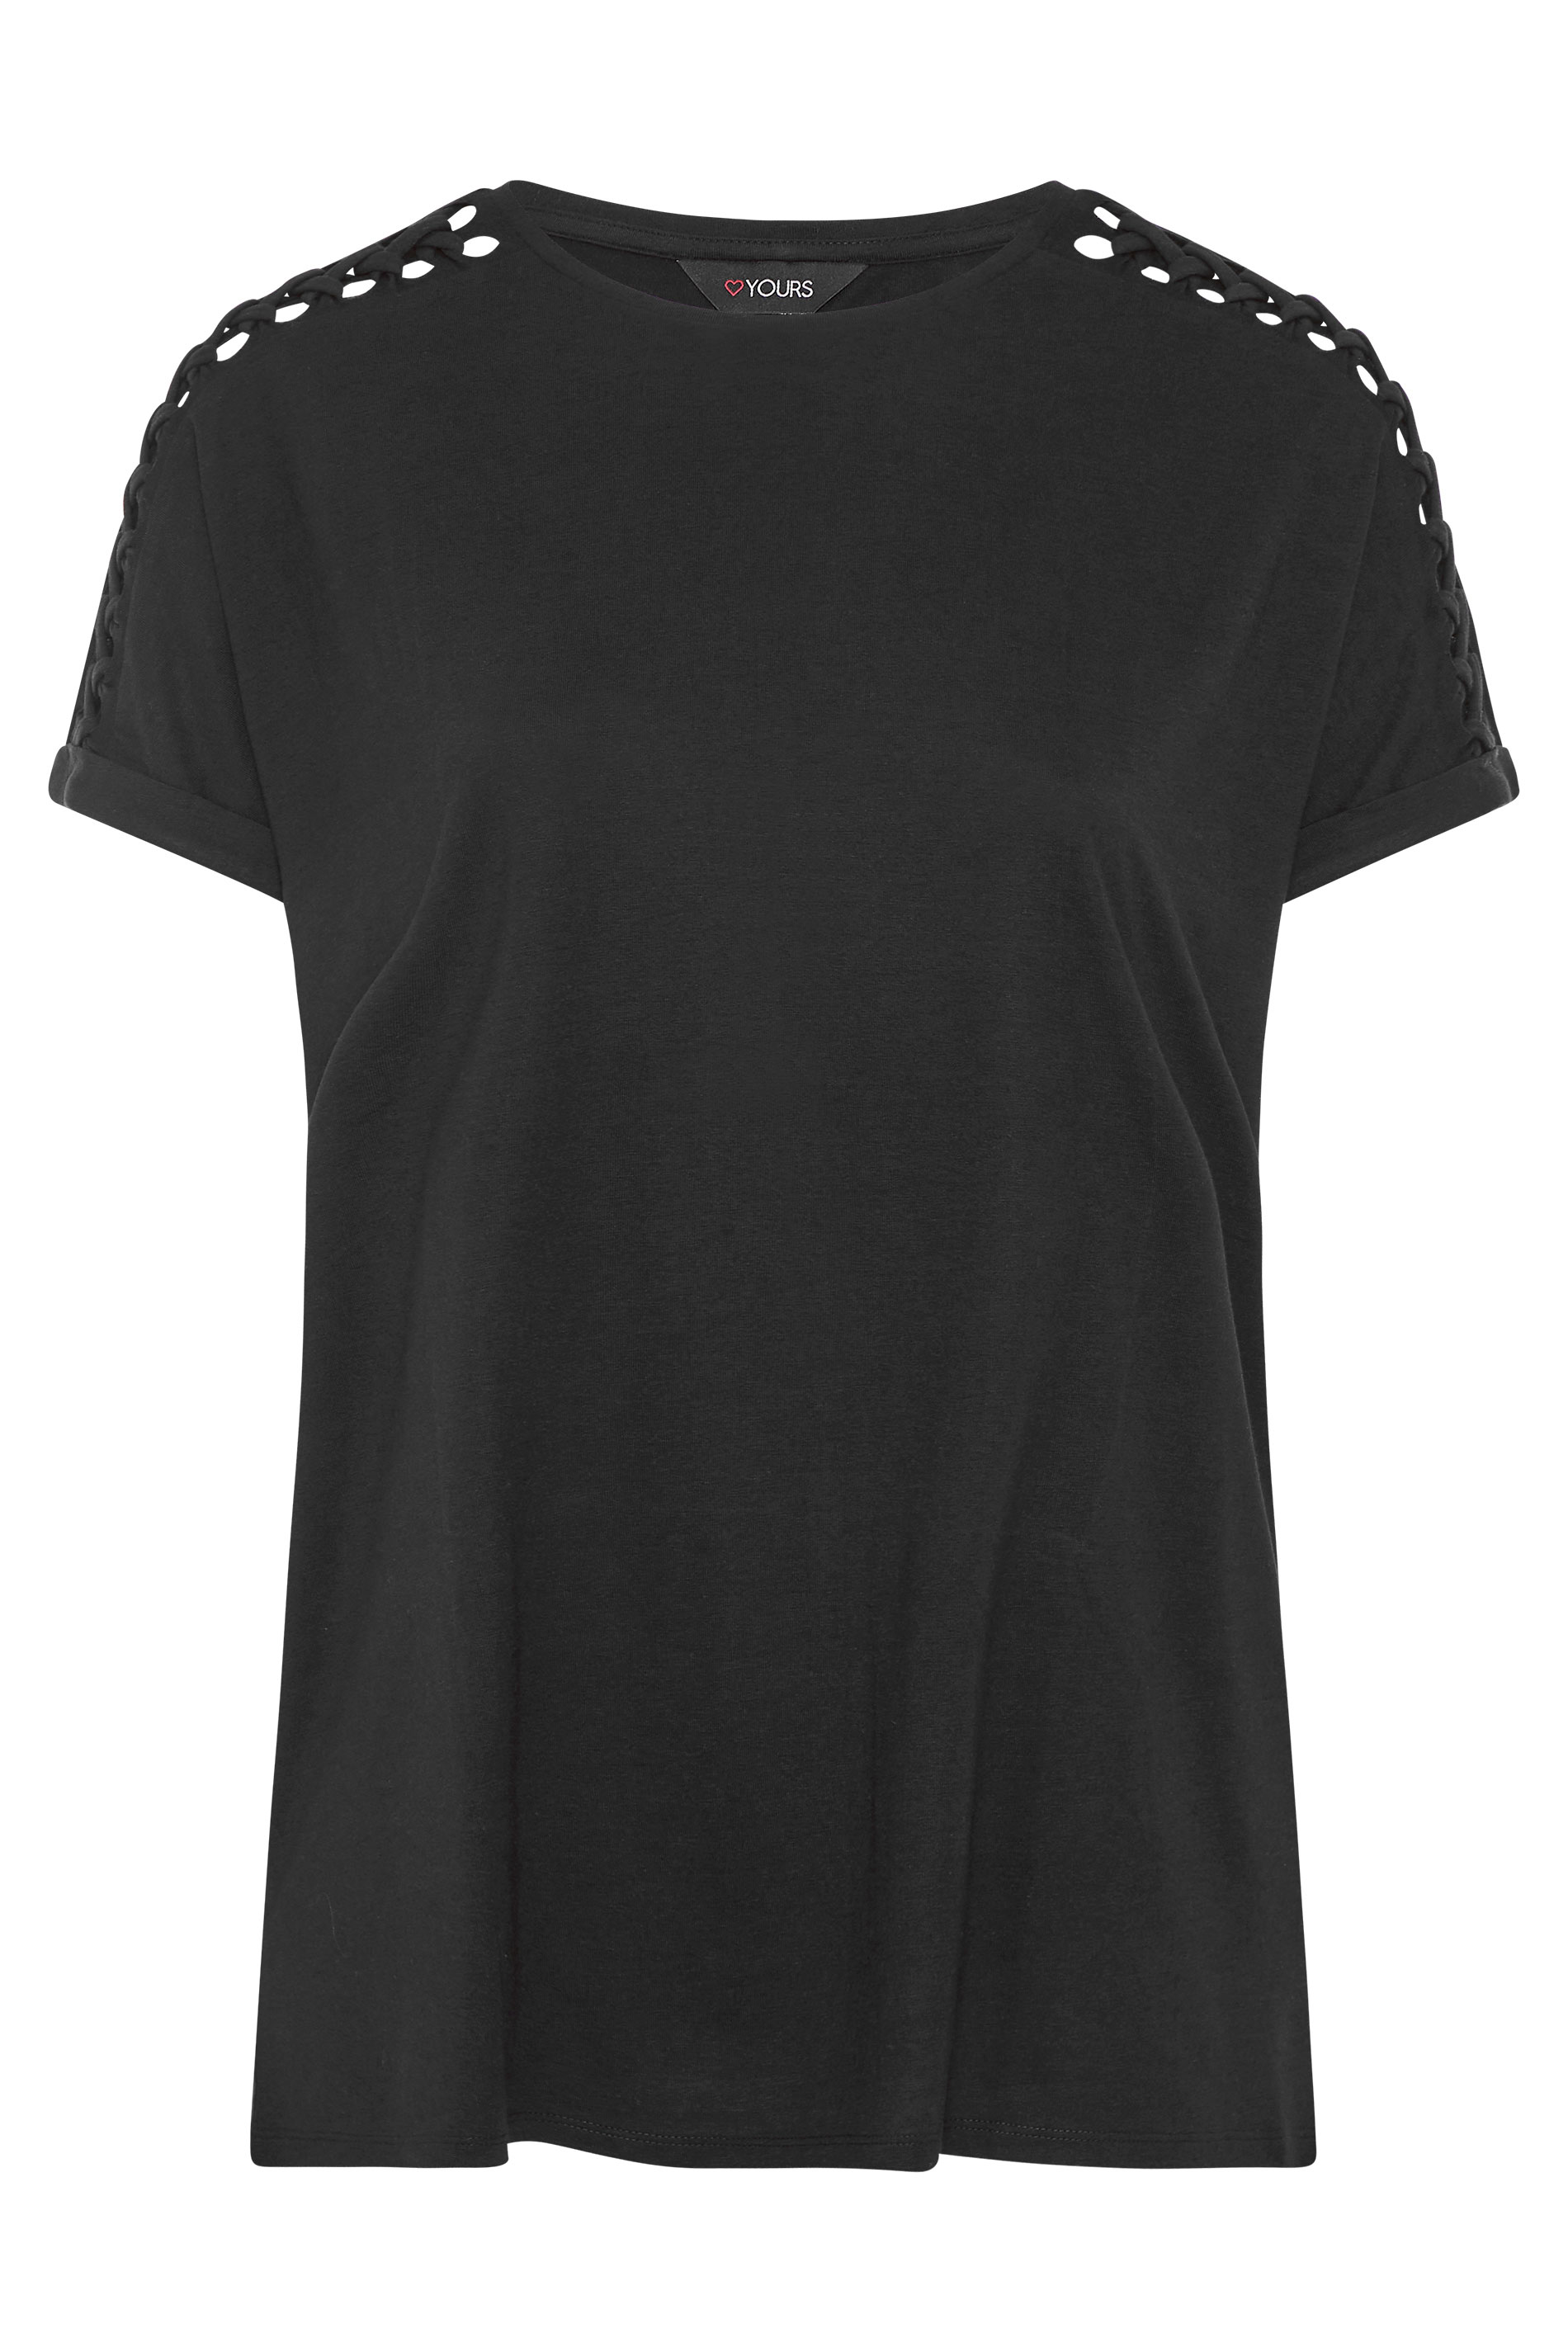 Black Laser Cut T-Shirt | Yours Clothing